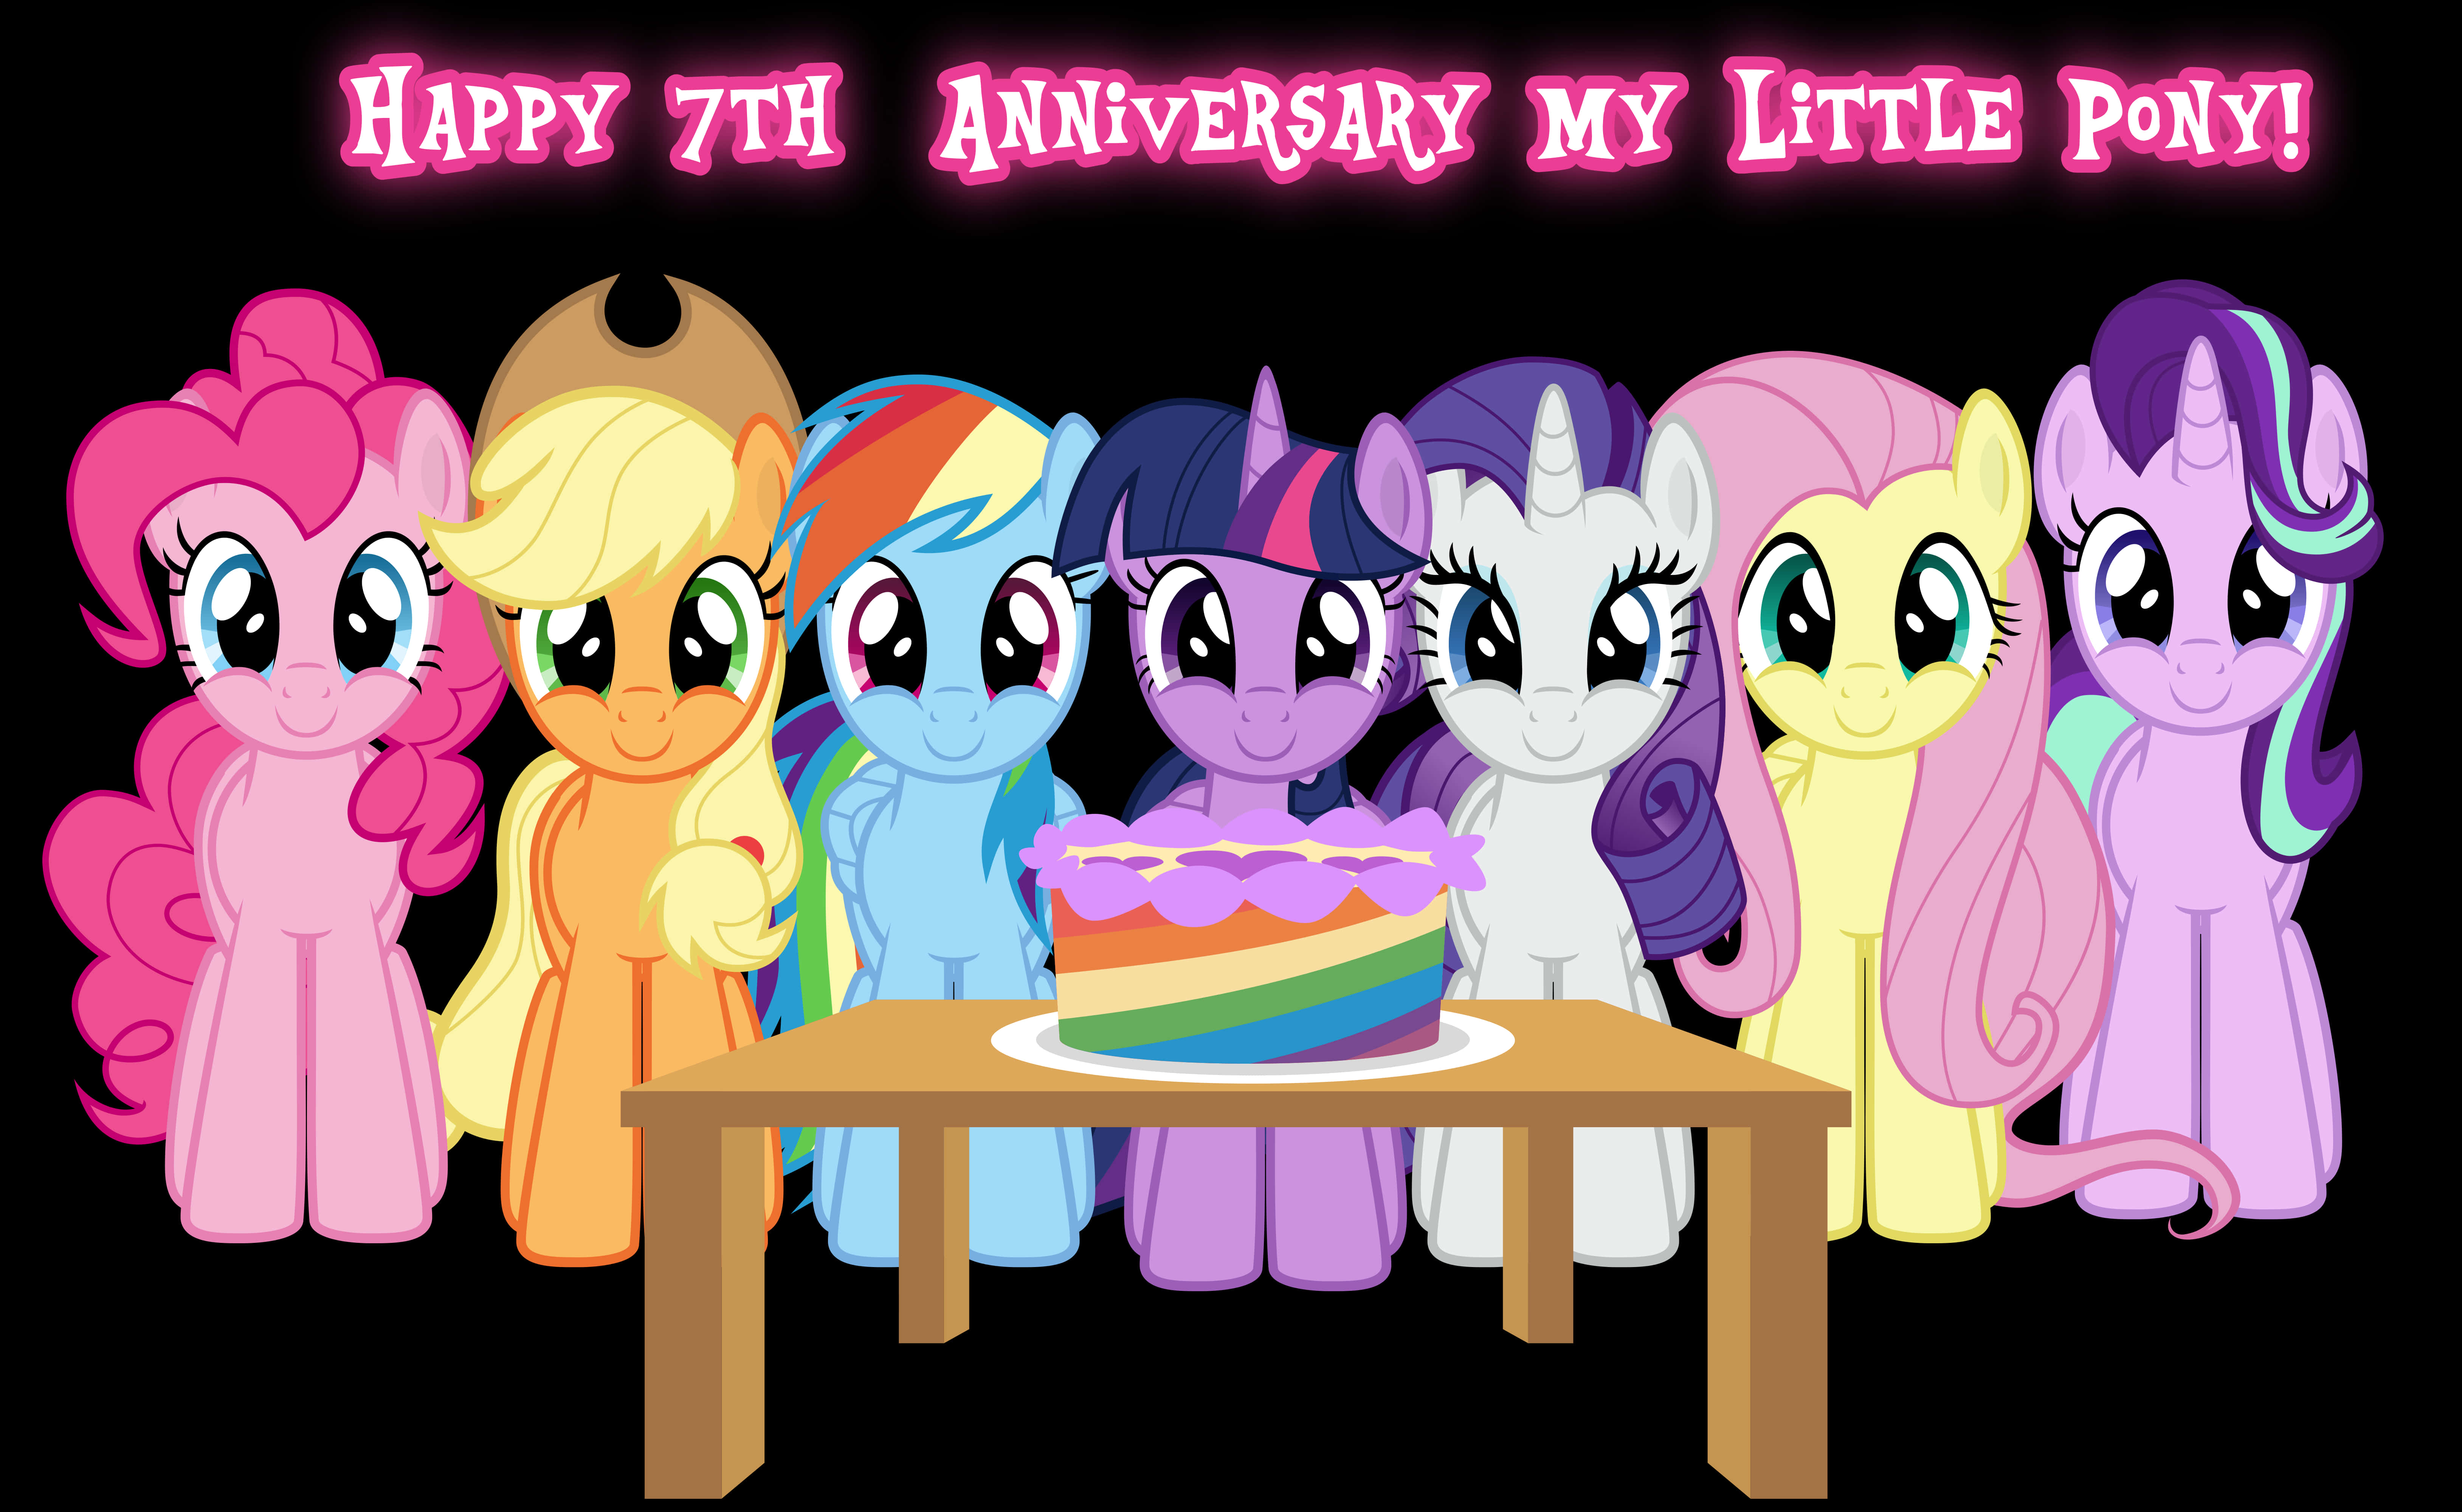 My Little Pony7th Anniversary Celebration